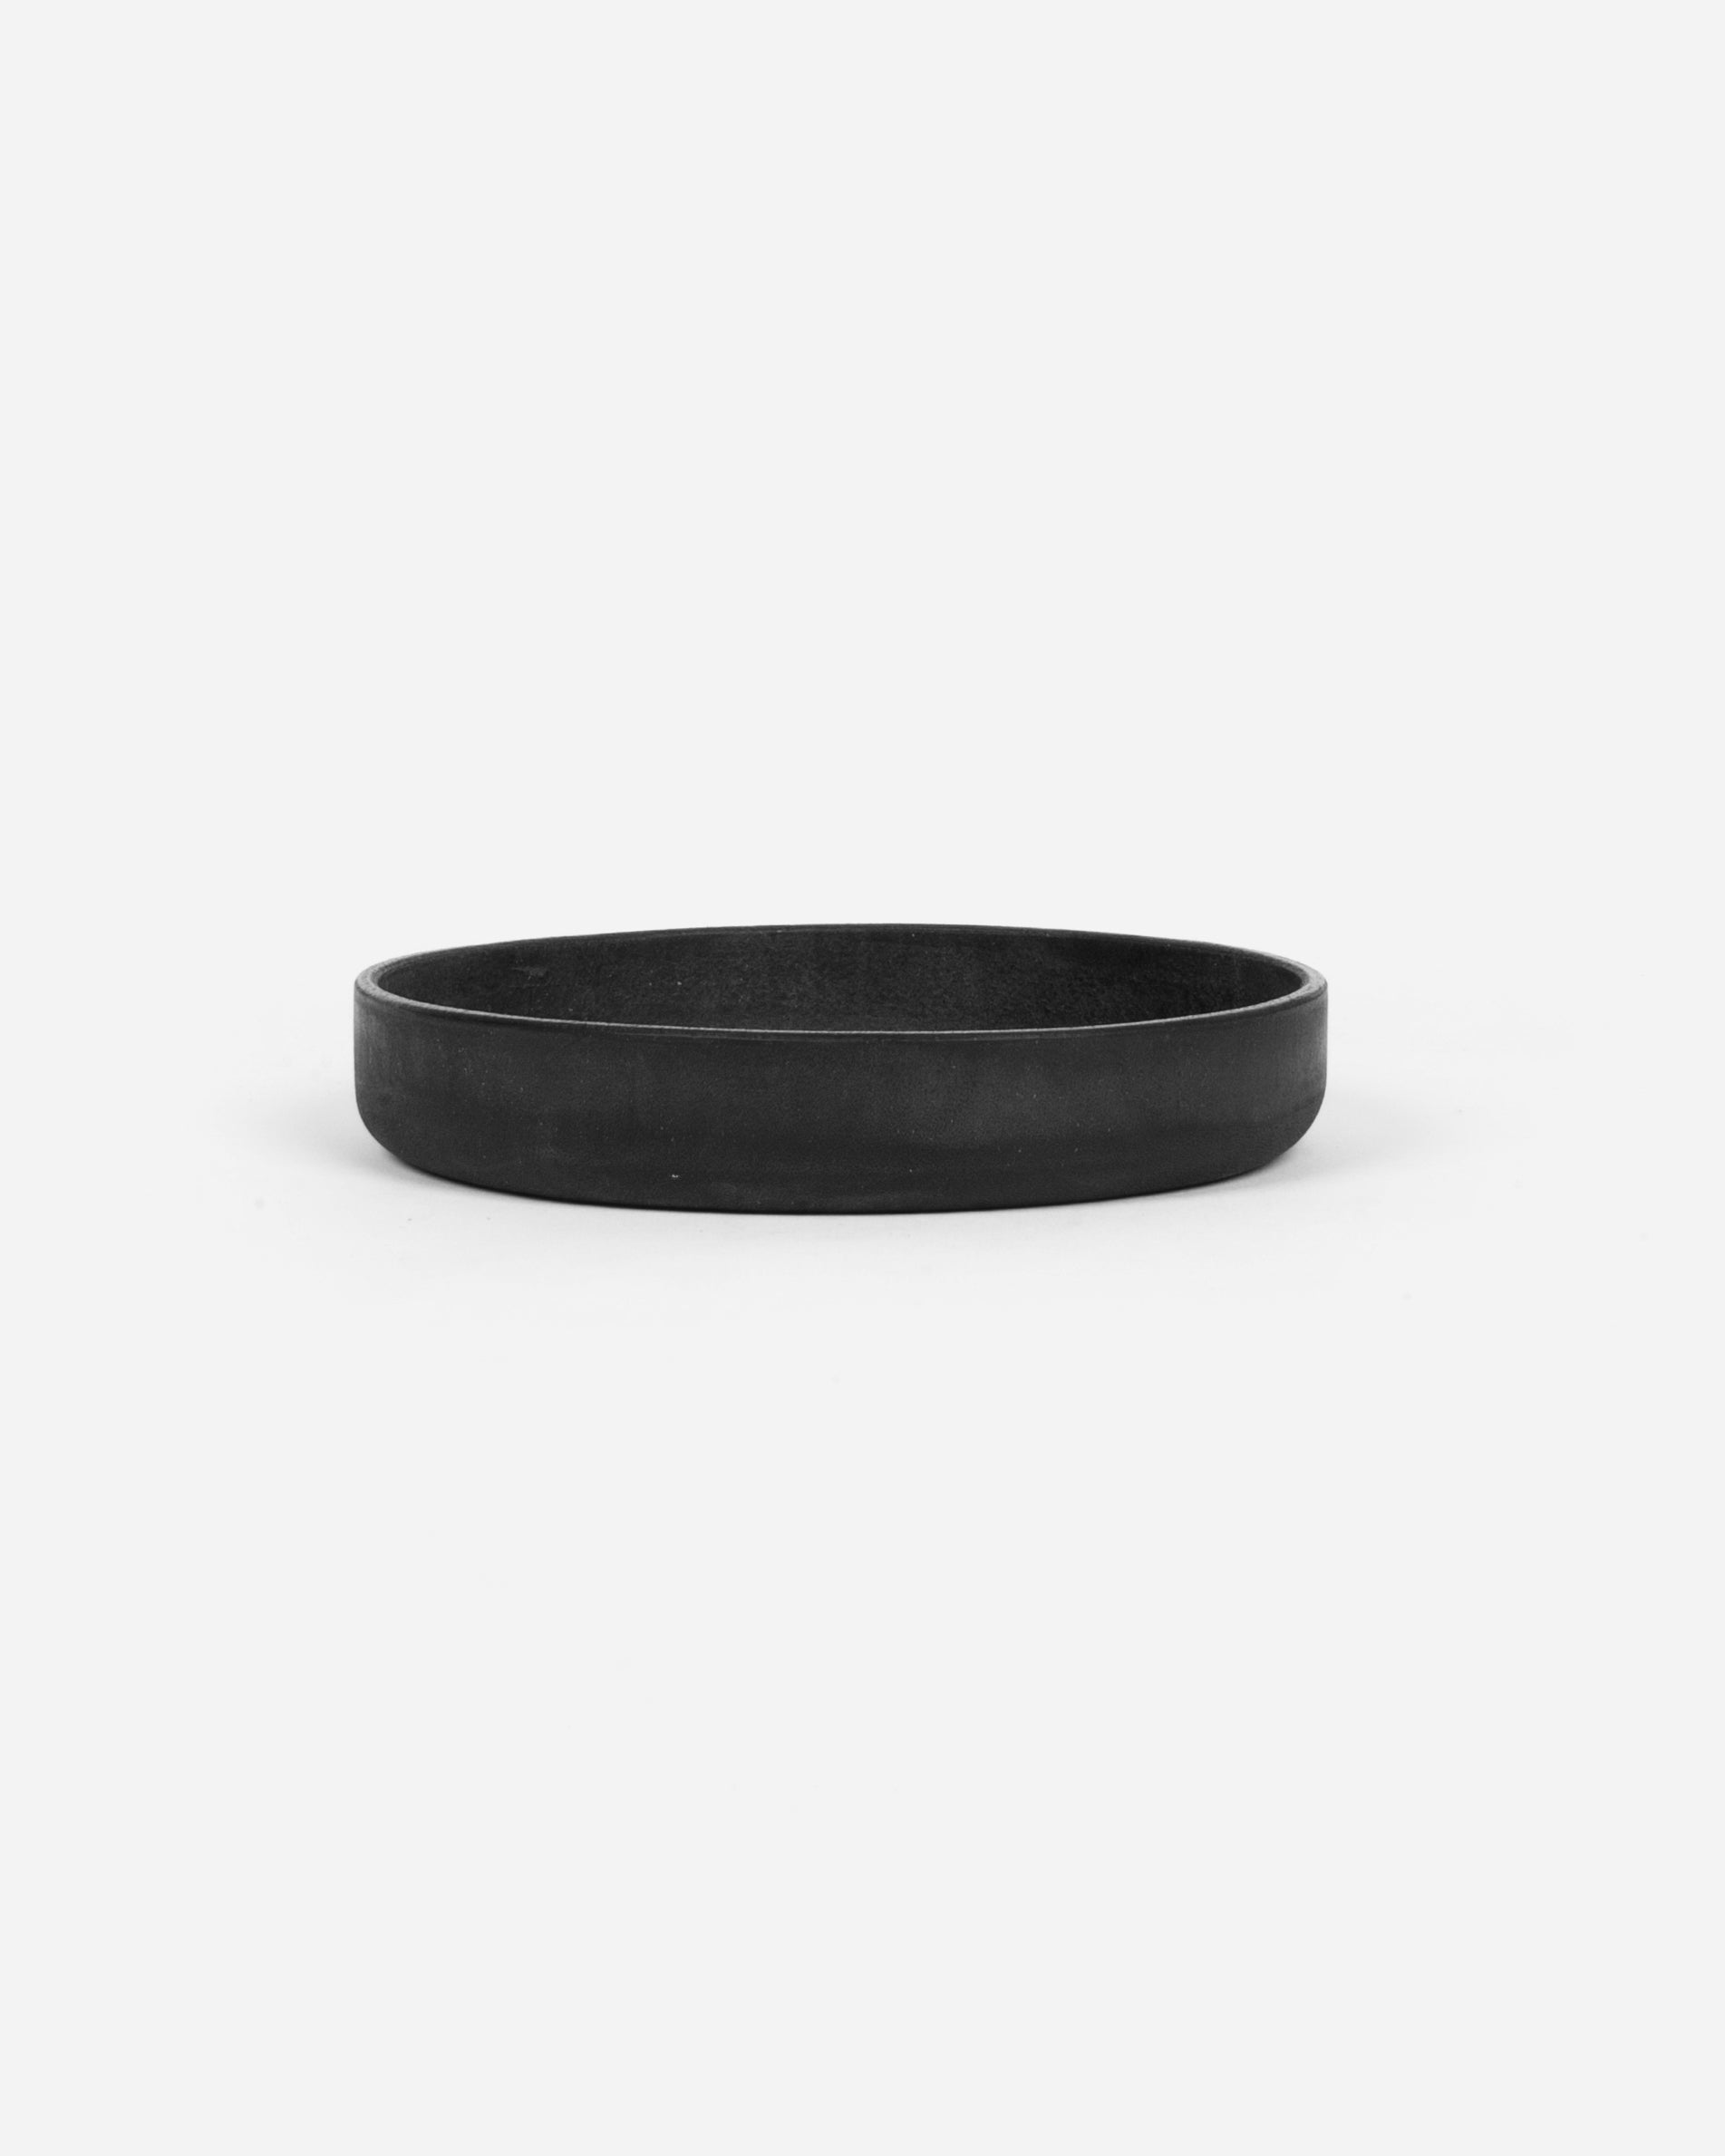 Medium Round Leather Tray in Black